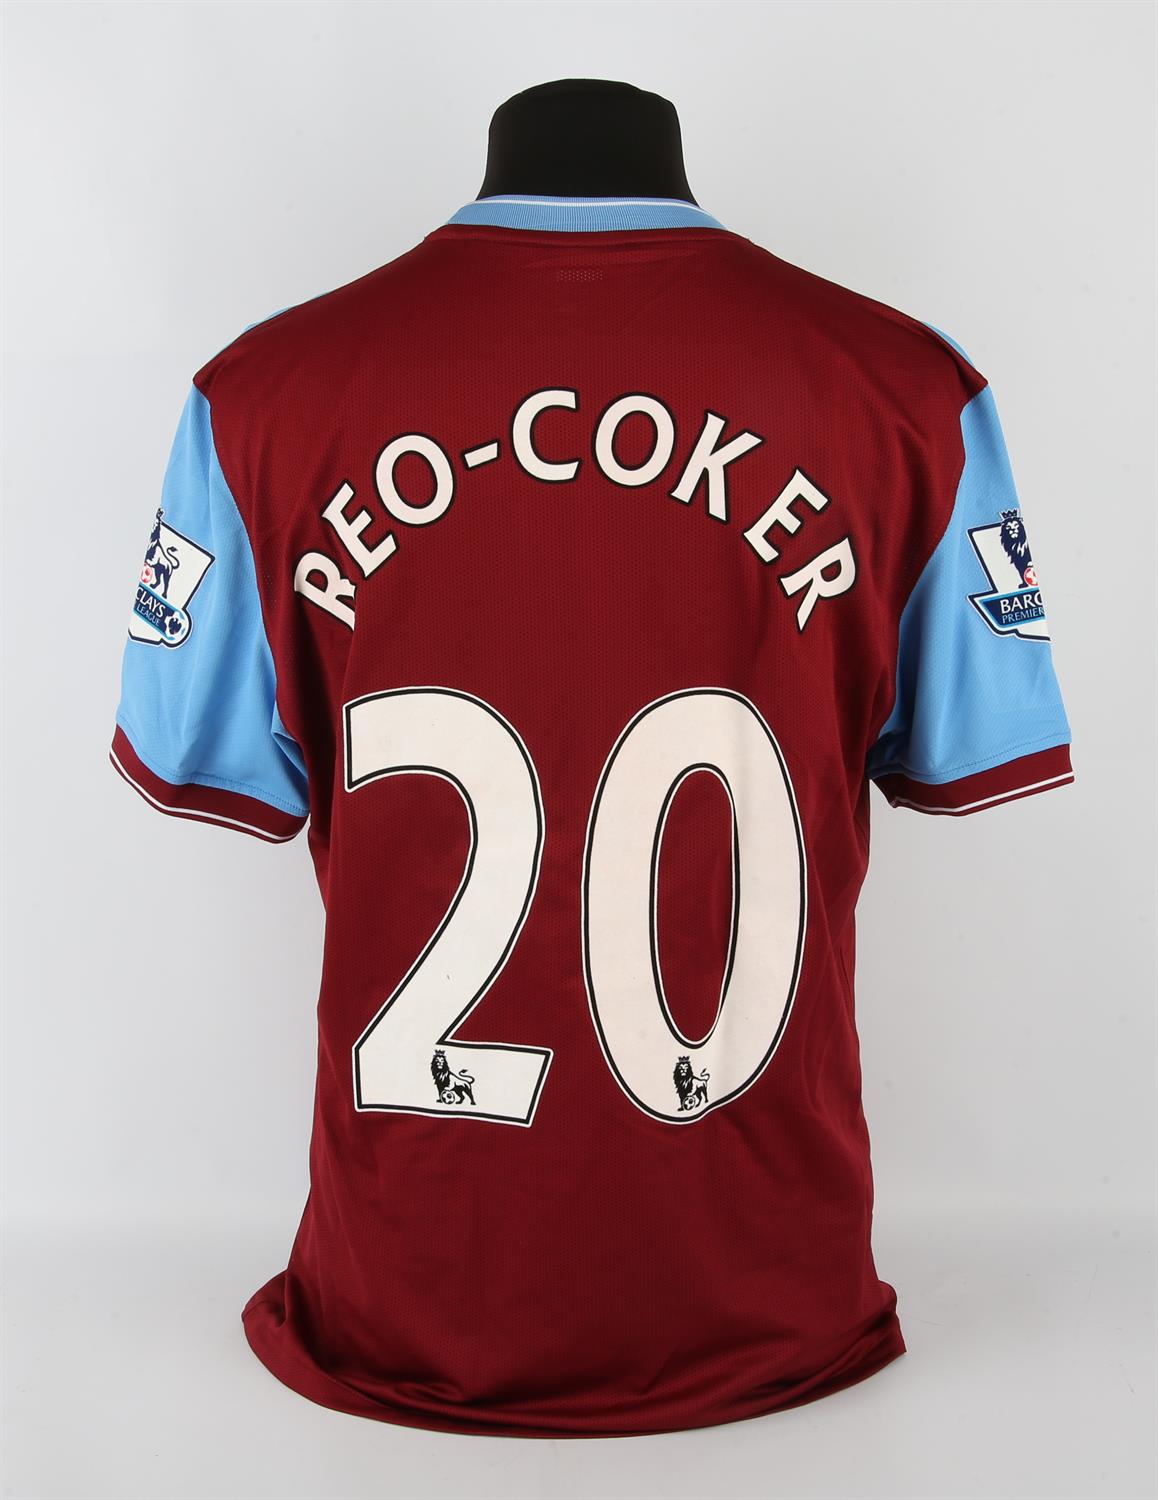 Aston Villa Football Club, Reo-Coker (No.20) 2009-2010. S/S. Match Worn during season.